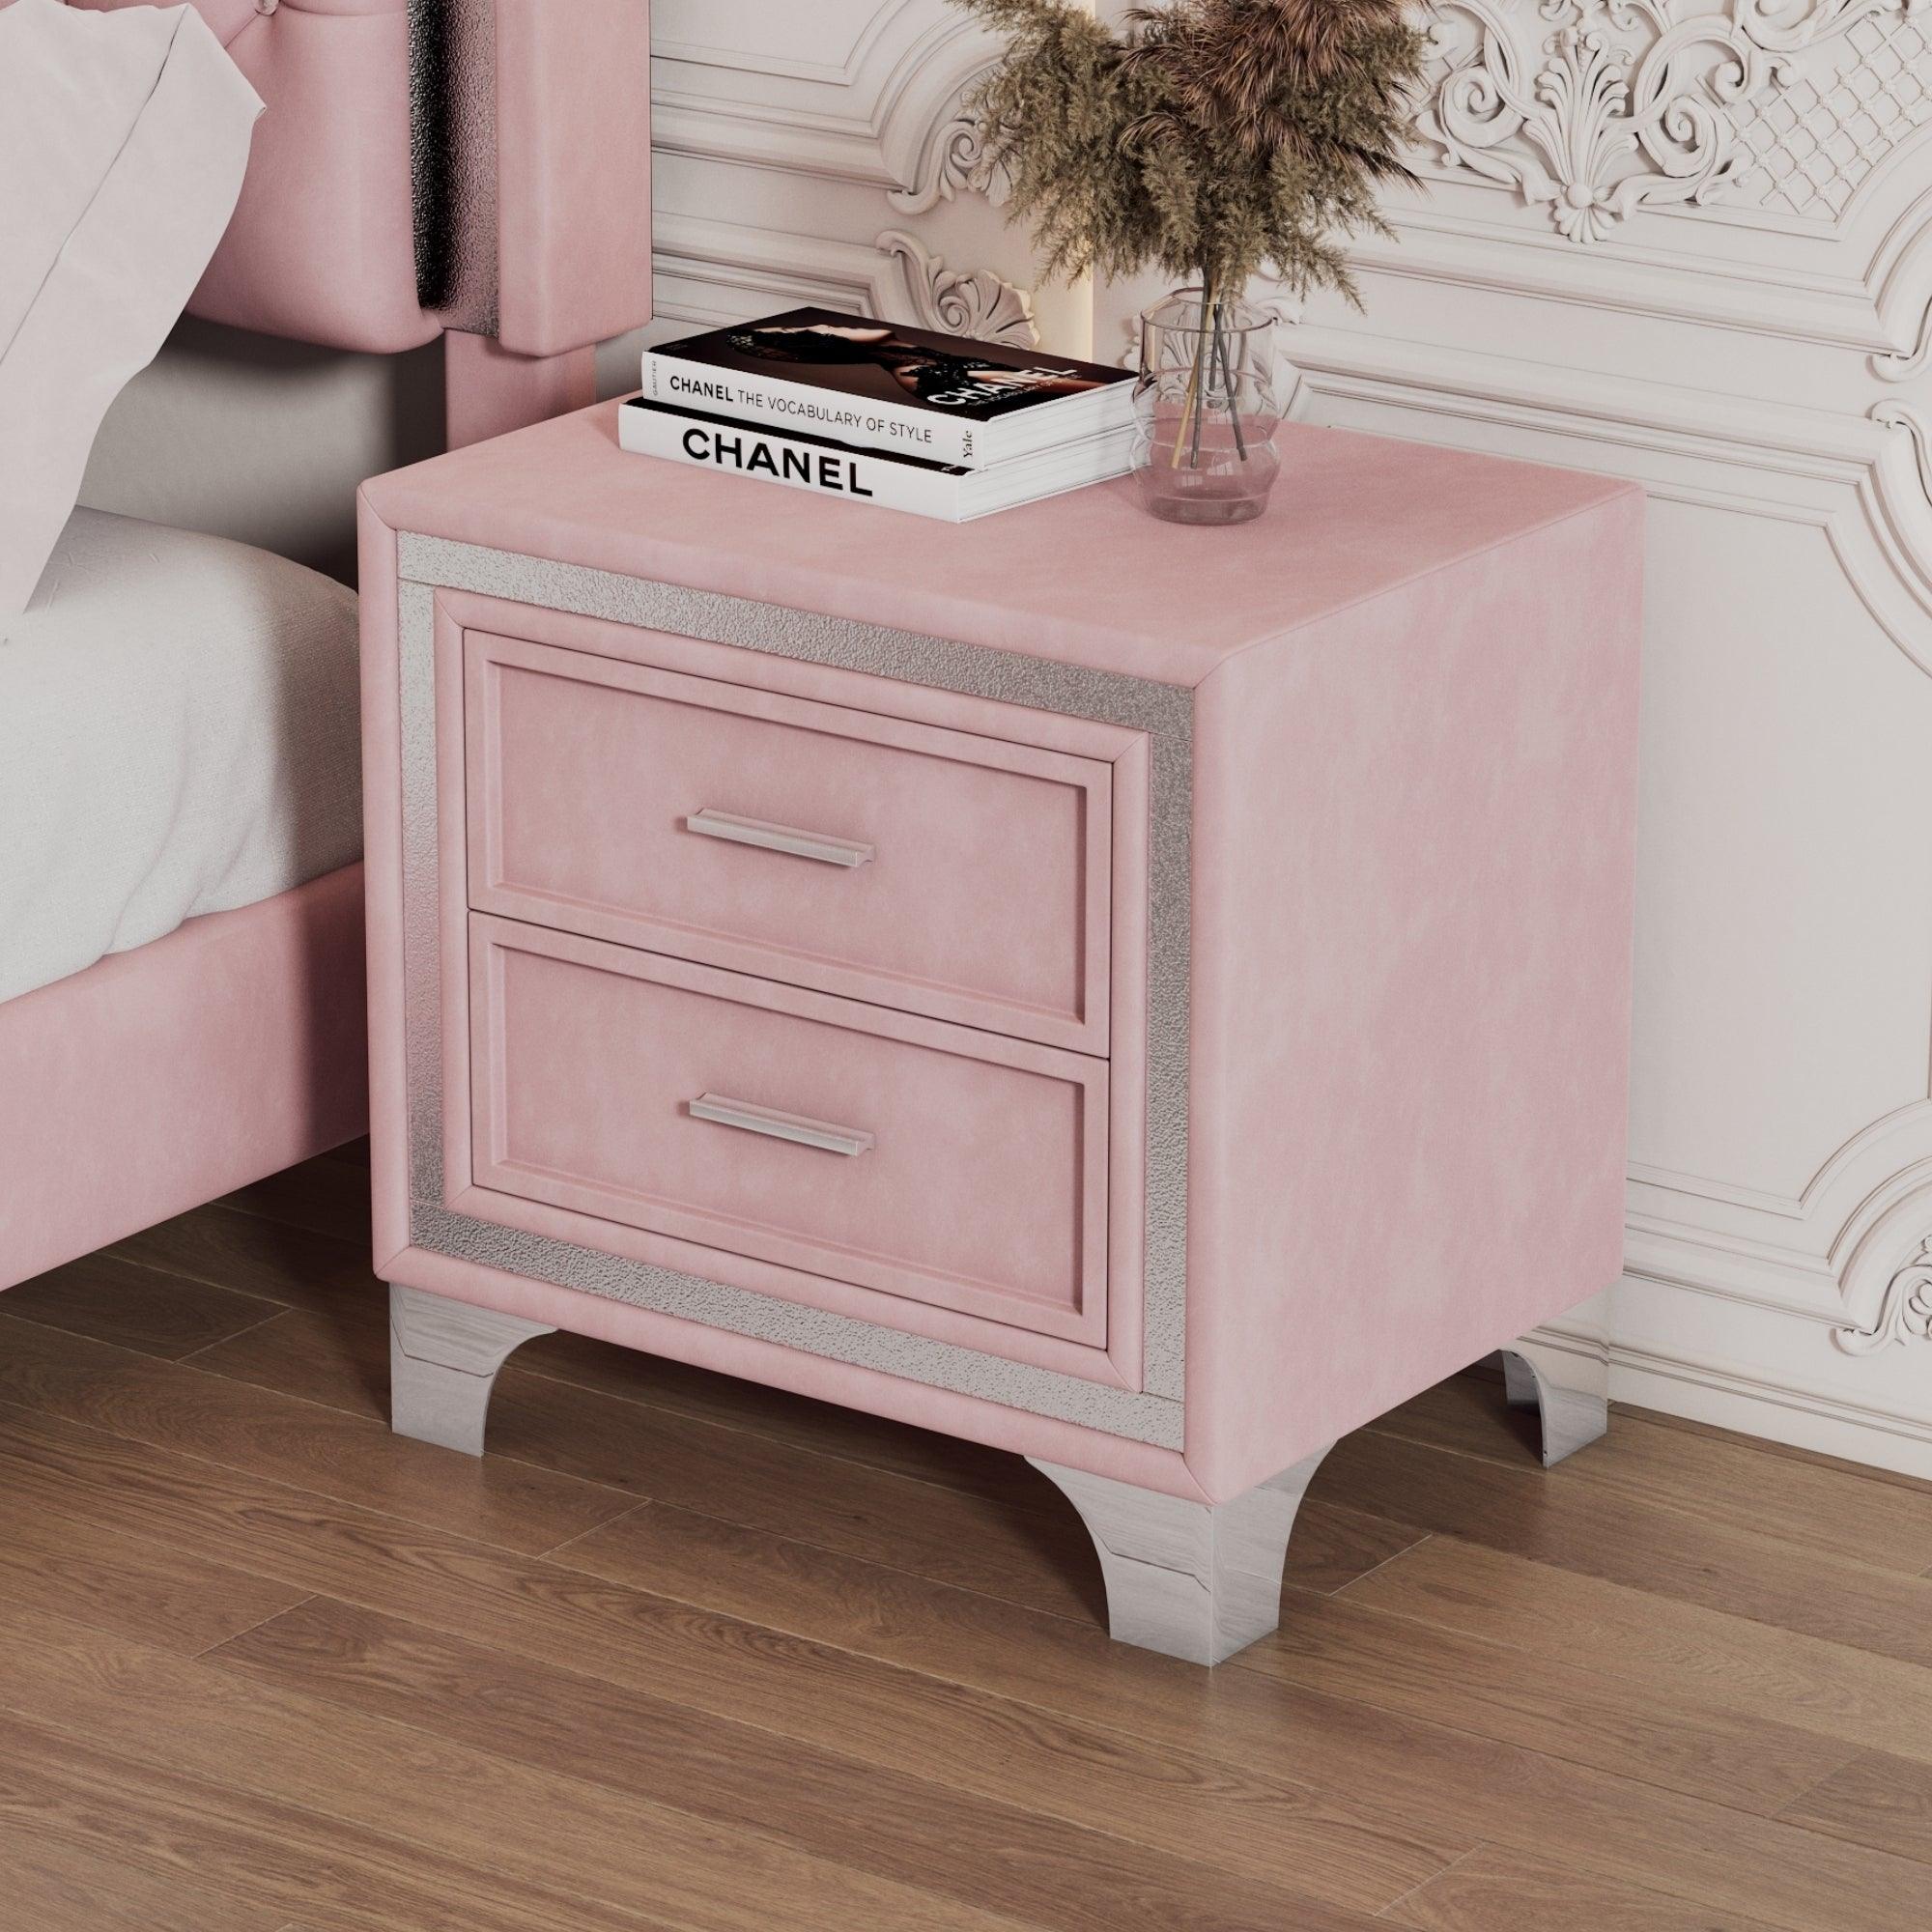 ELCRU 2-Drawer Velvet Nightstand with Metal Legs for Bedroom - Pink